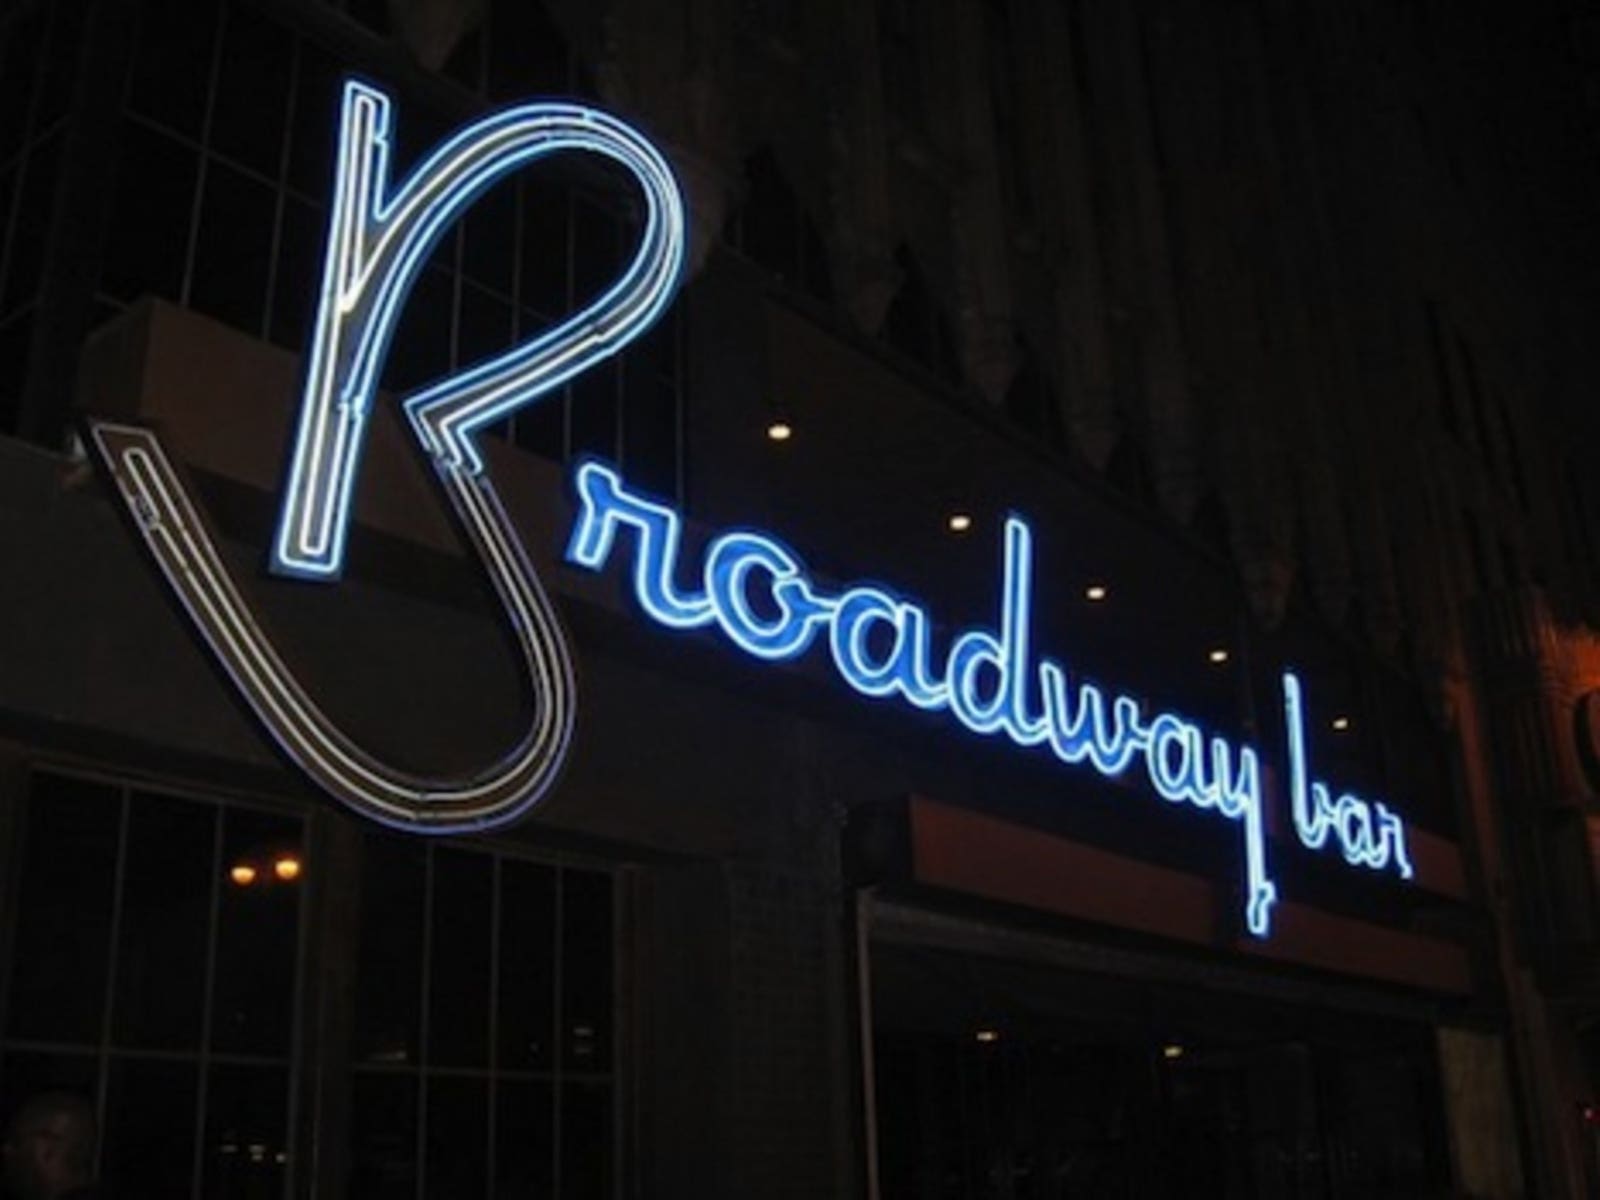 Broadway Bar